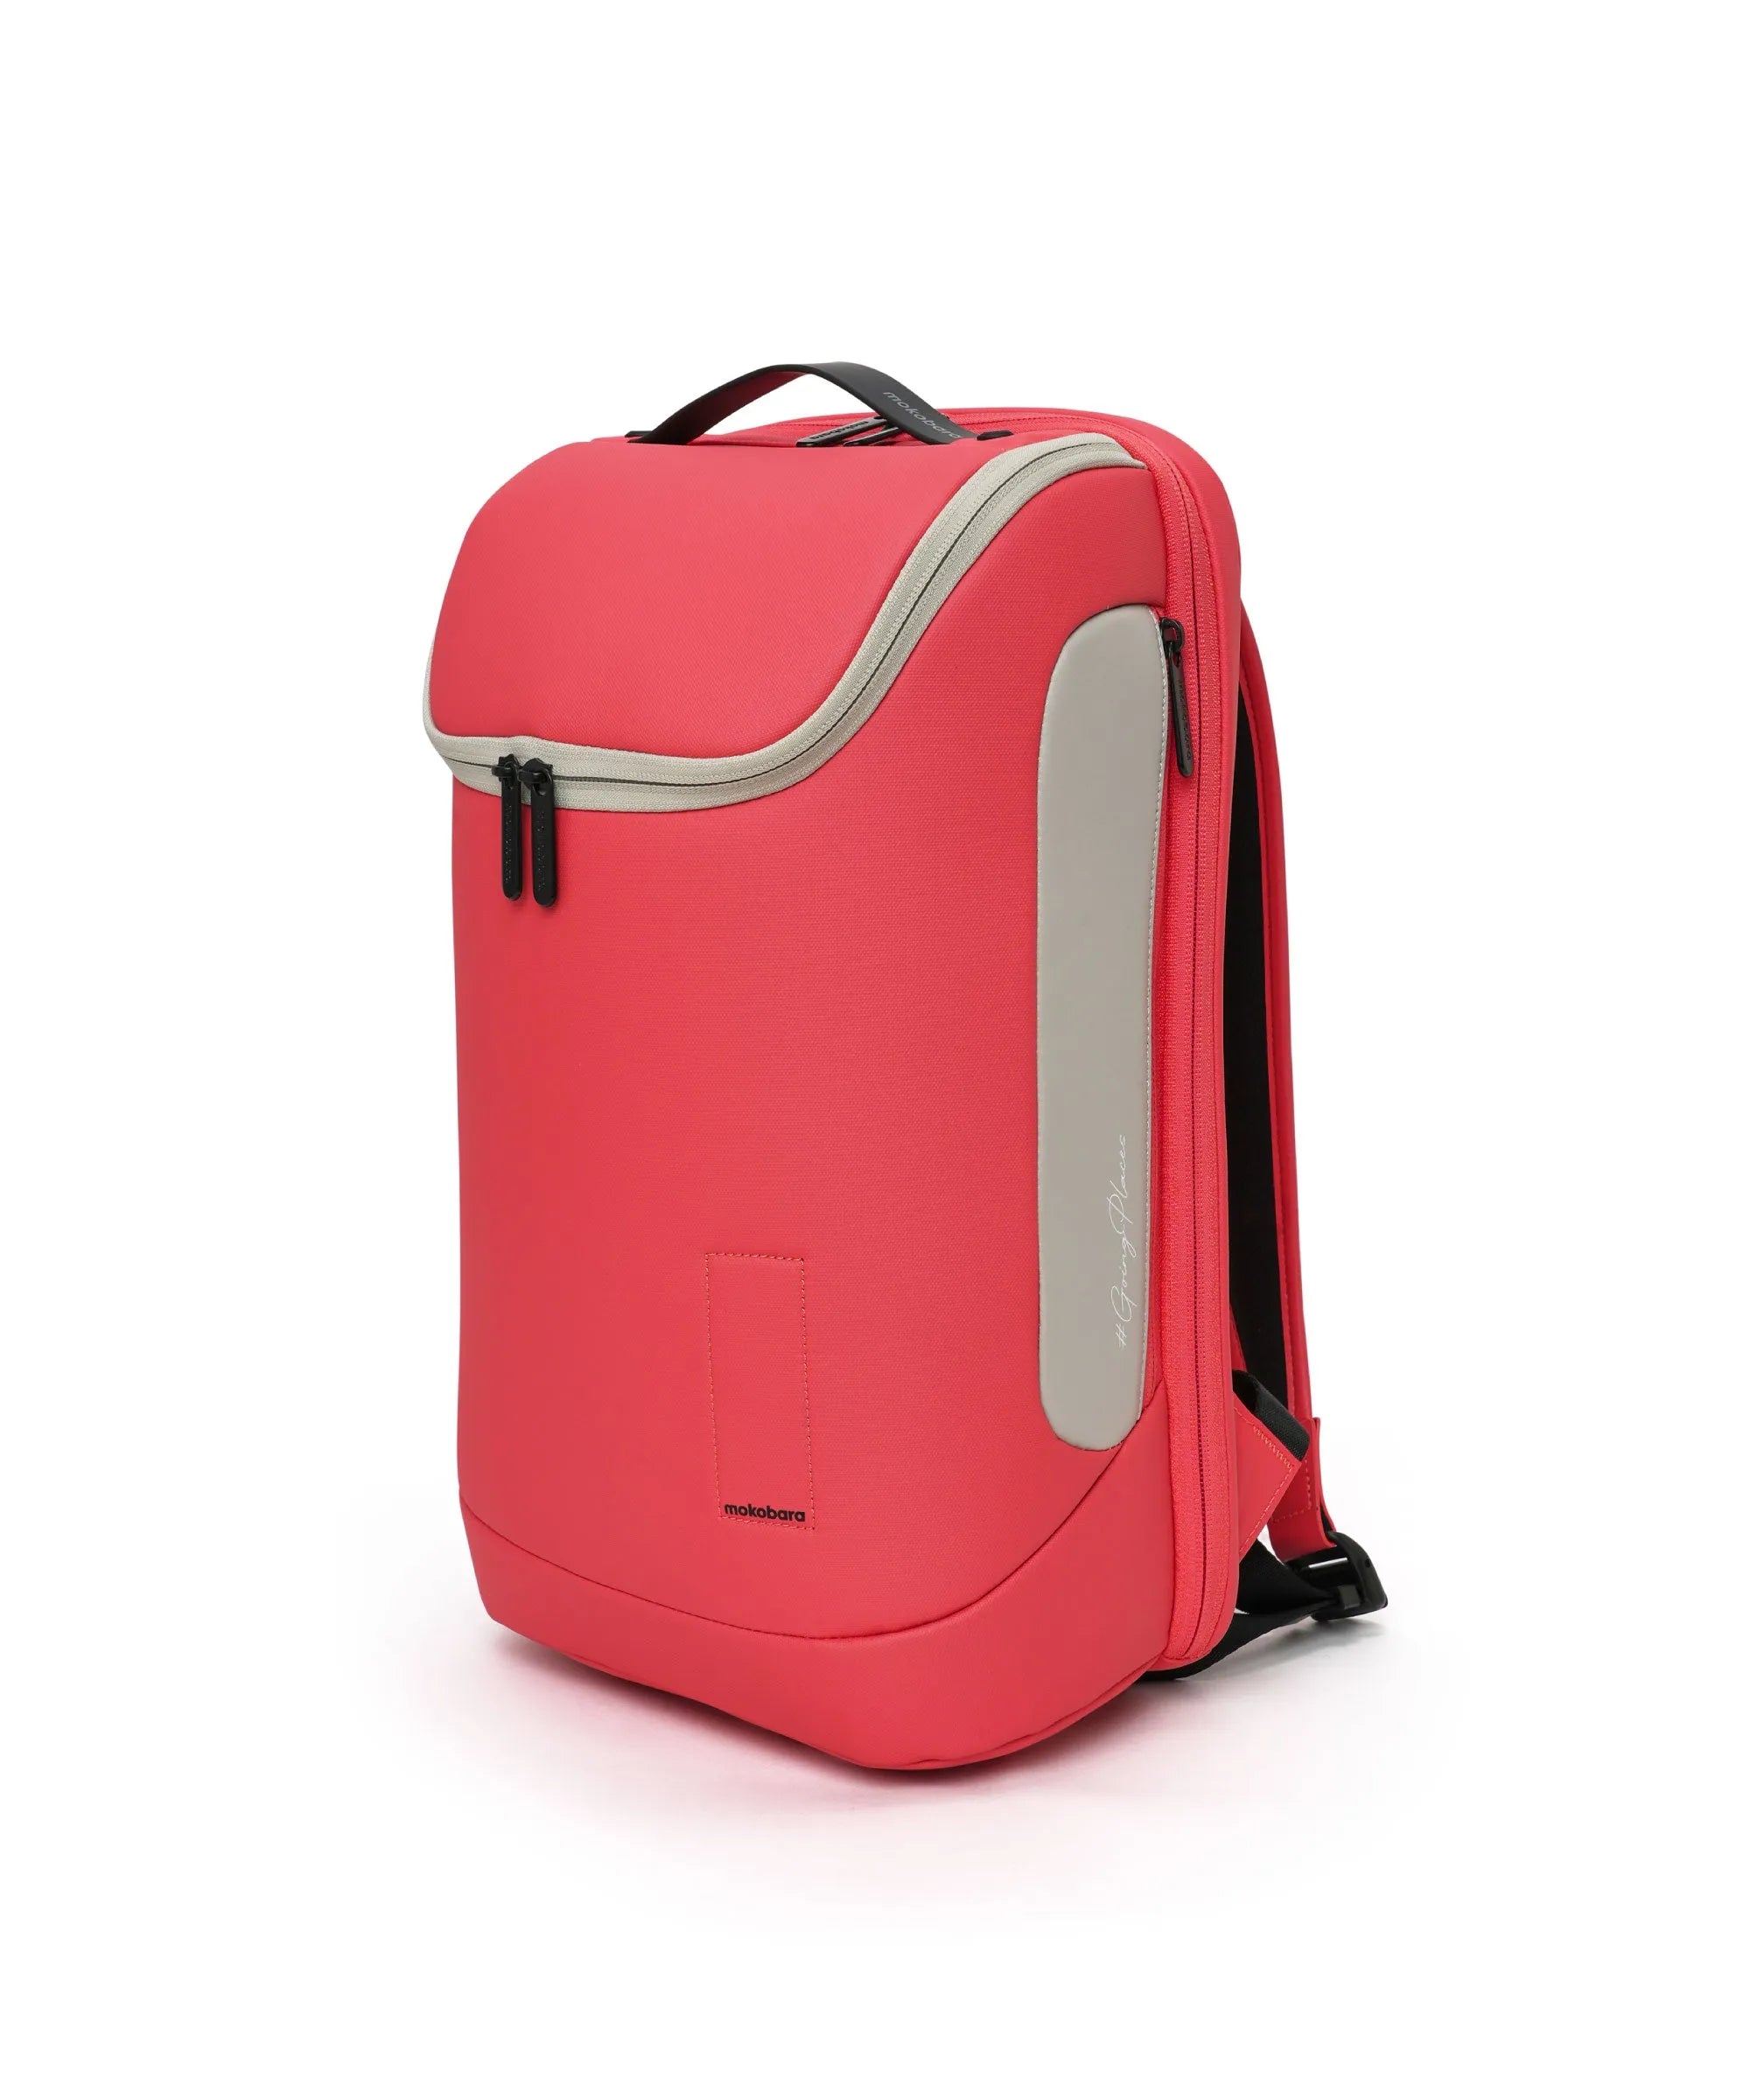 Color_Modern Love II | The Transit Backpack - 20L